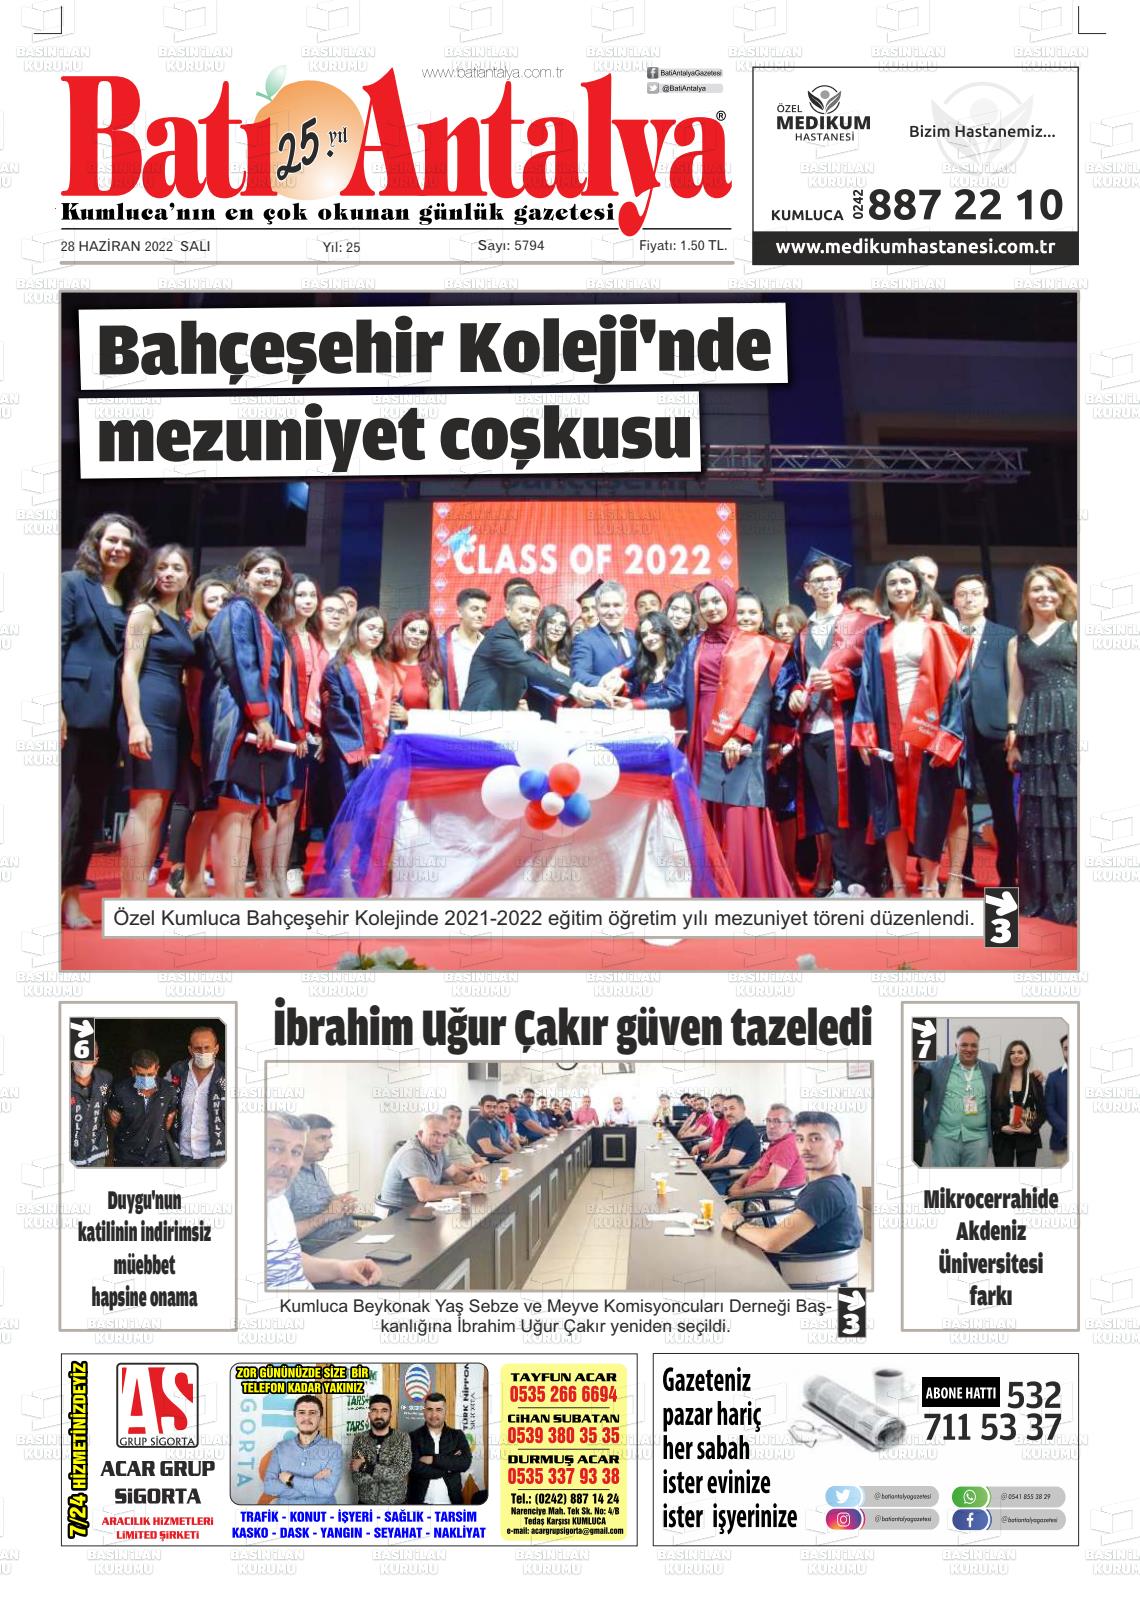 28 Haziran 2022 Batı Antalya Gazete Manşeti